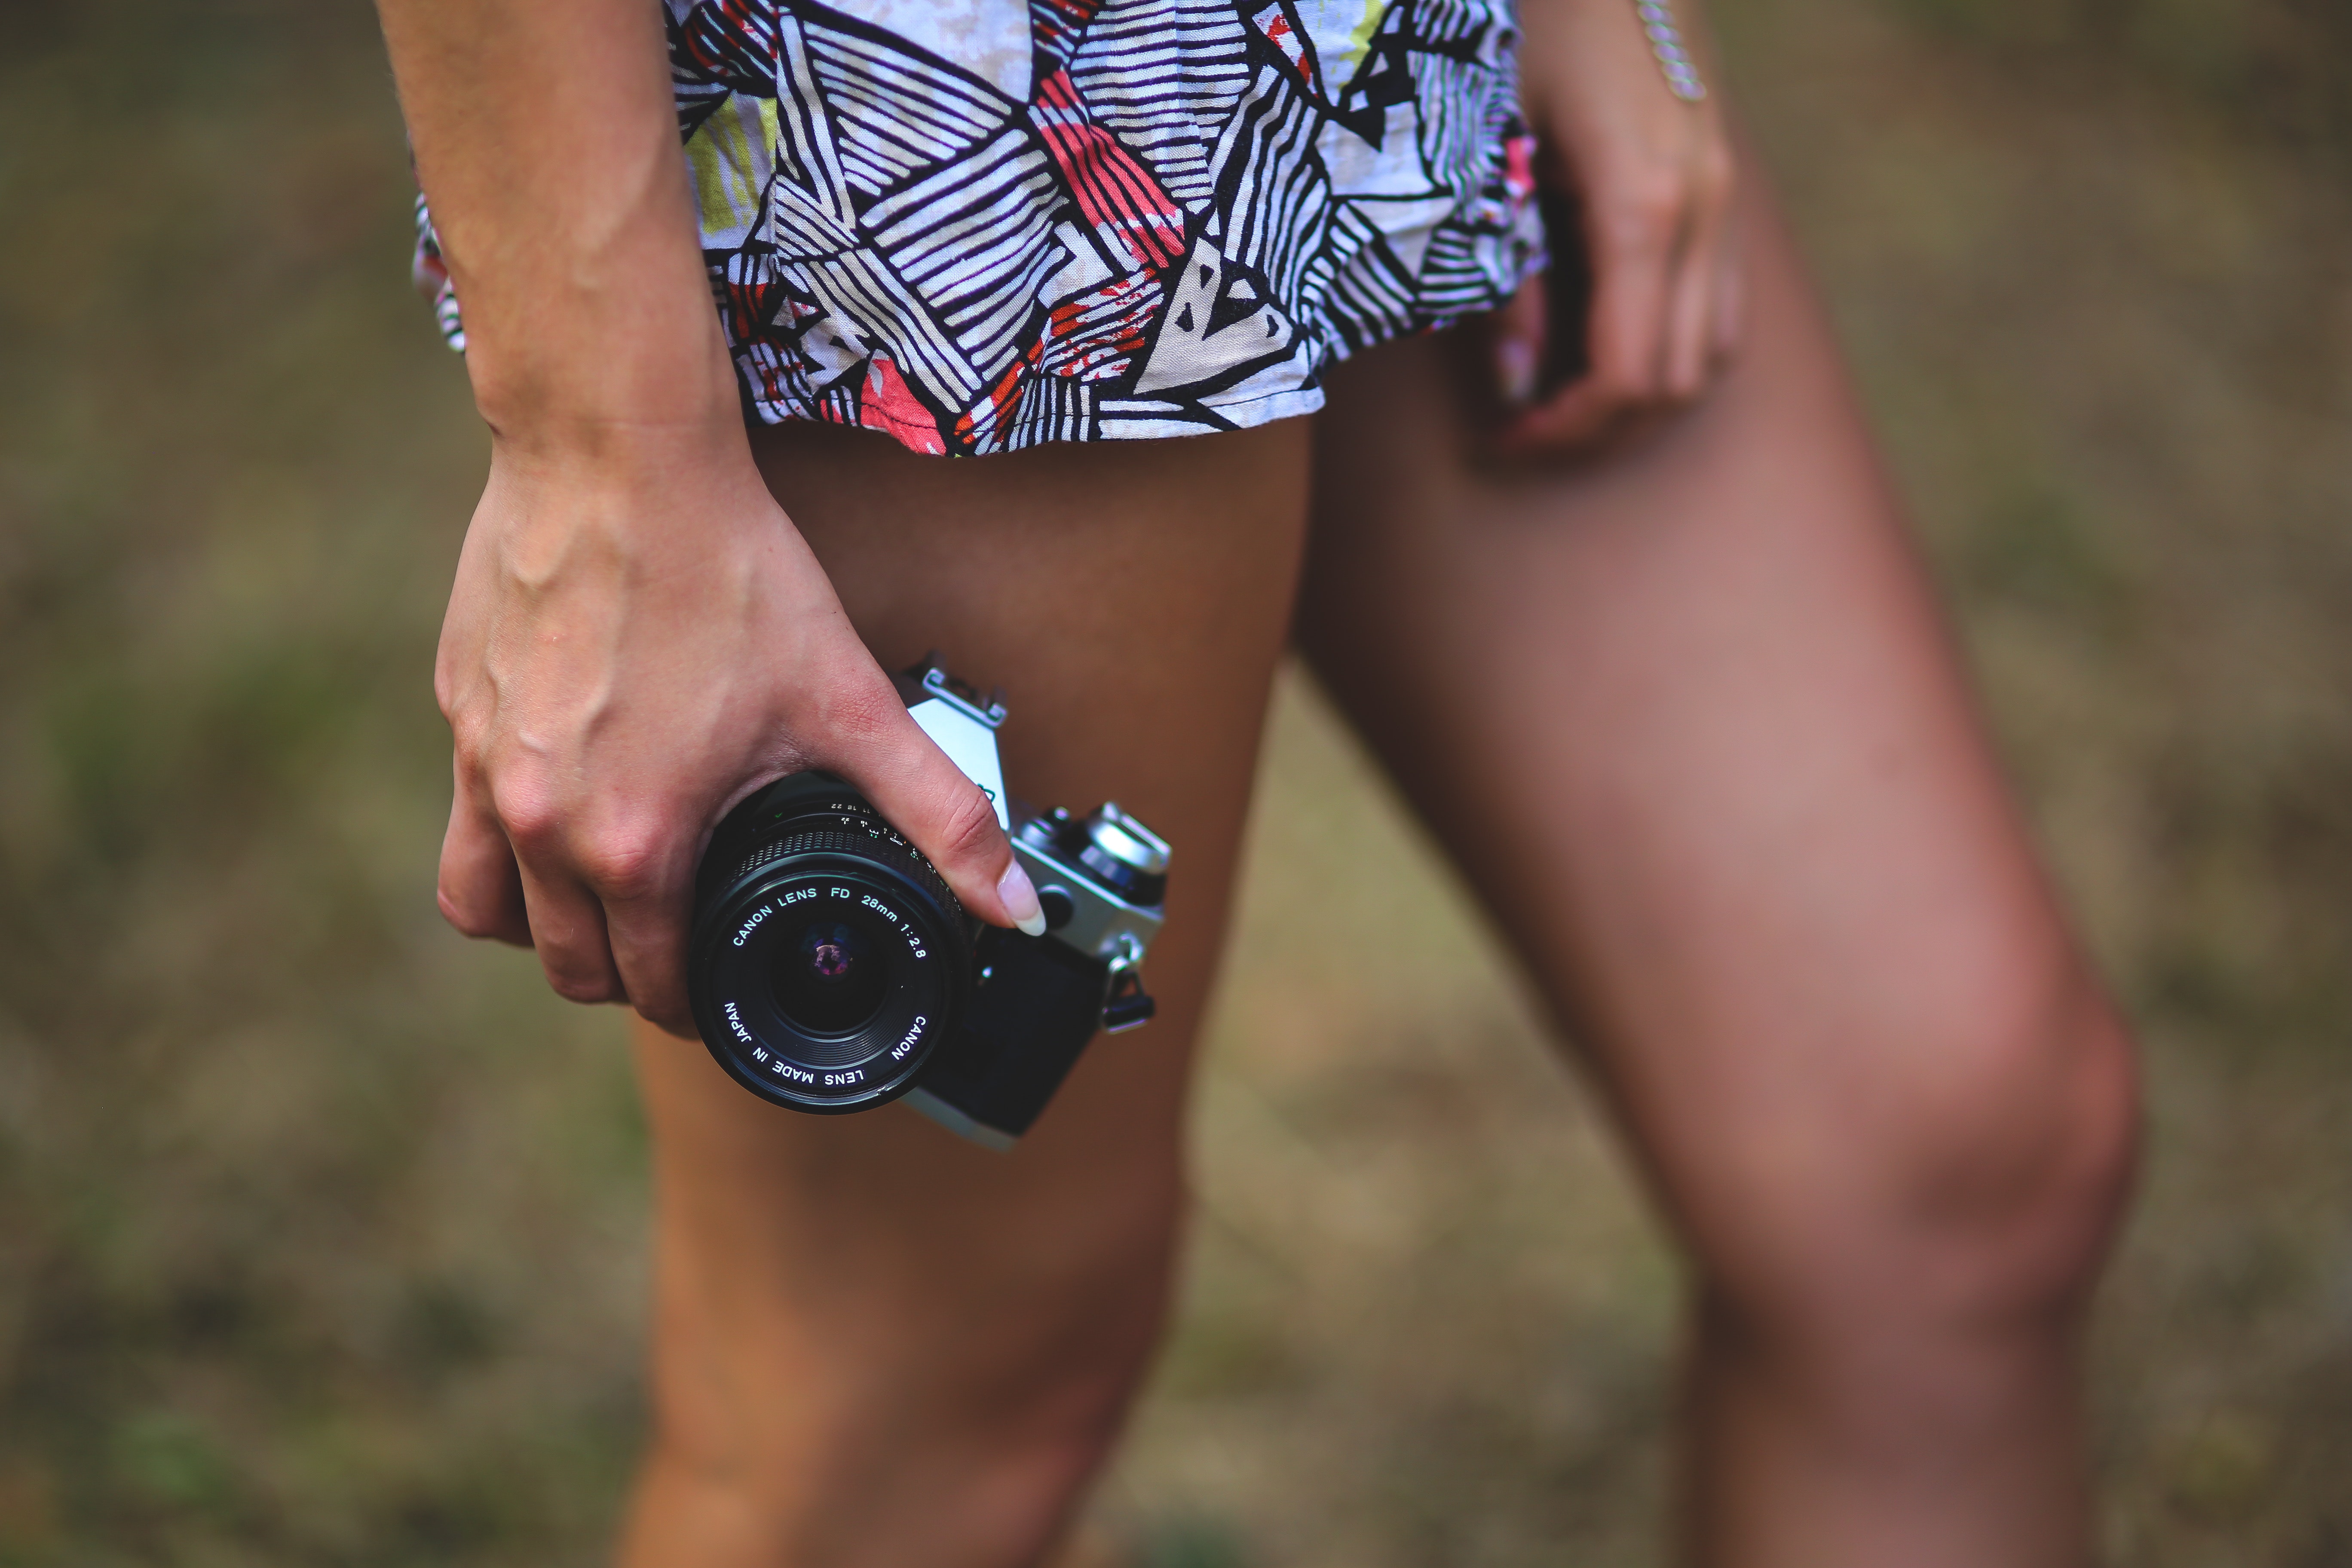 Camera in girls hand, Analog, Legs, Vintage, Taking photos, HQ Photo